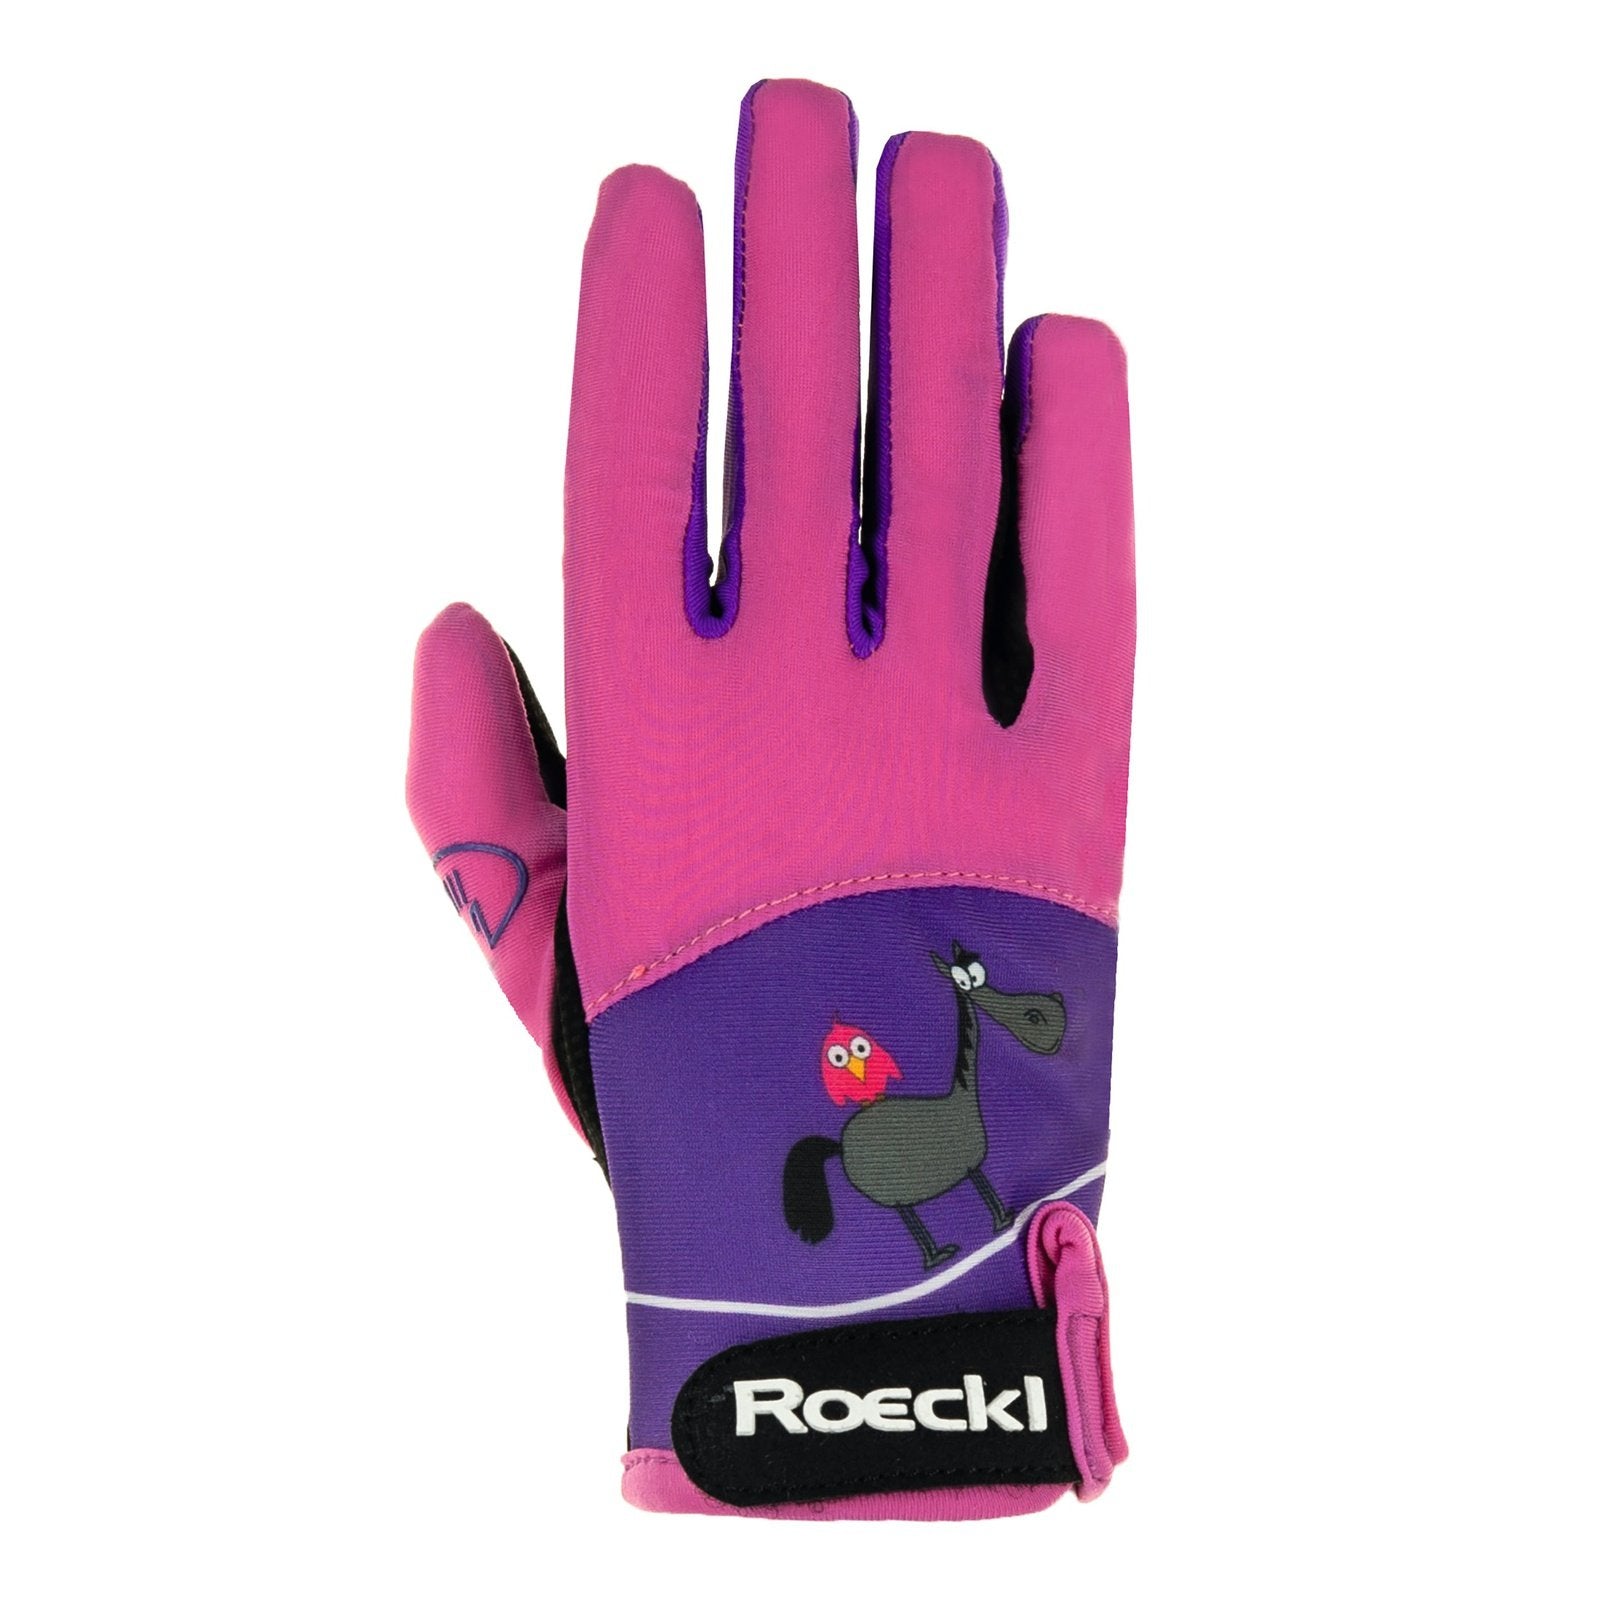 Roeckl Handschuhe Kansas bei SP-Reitsport